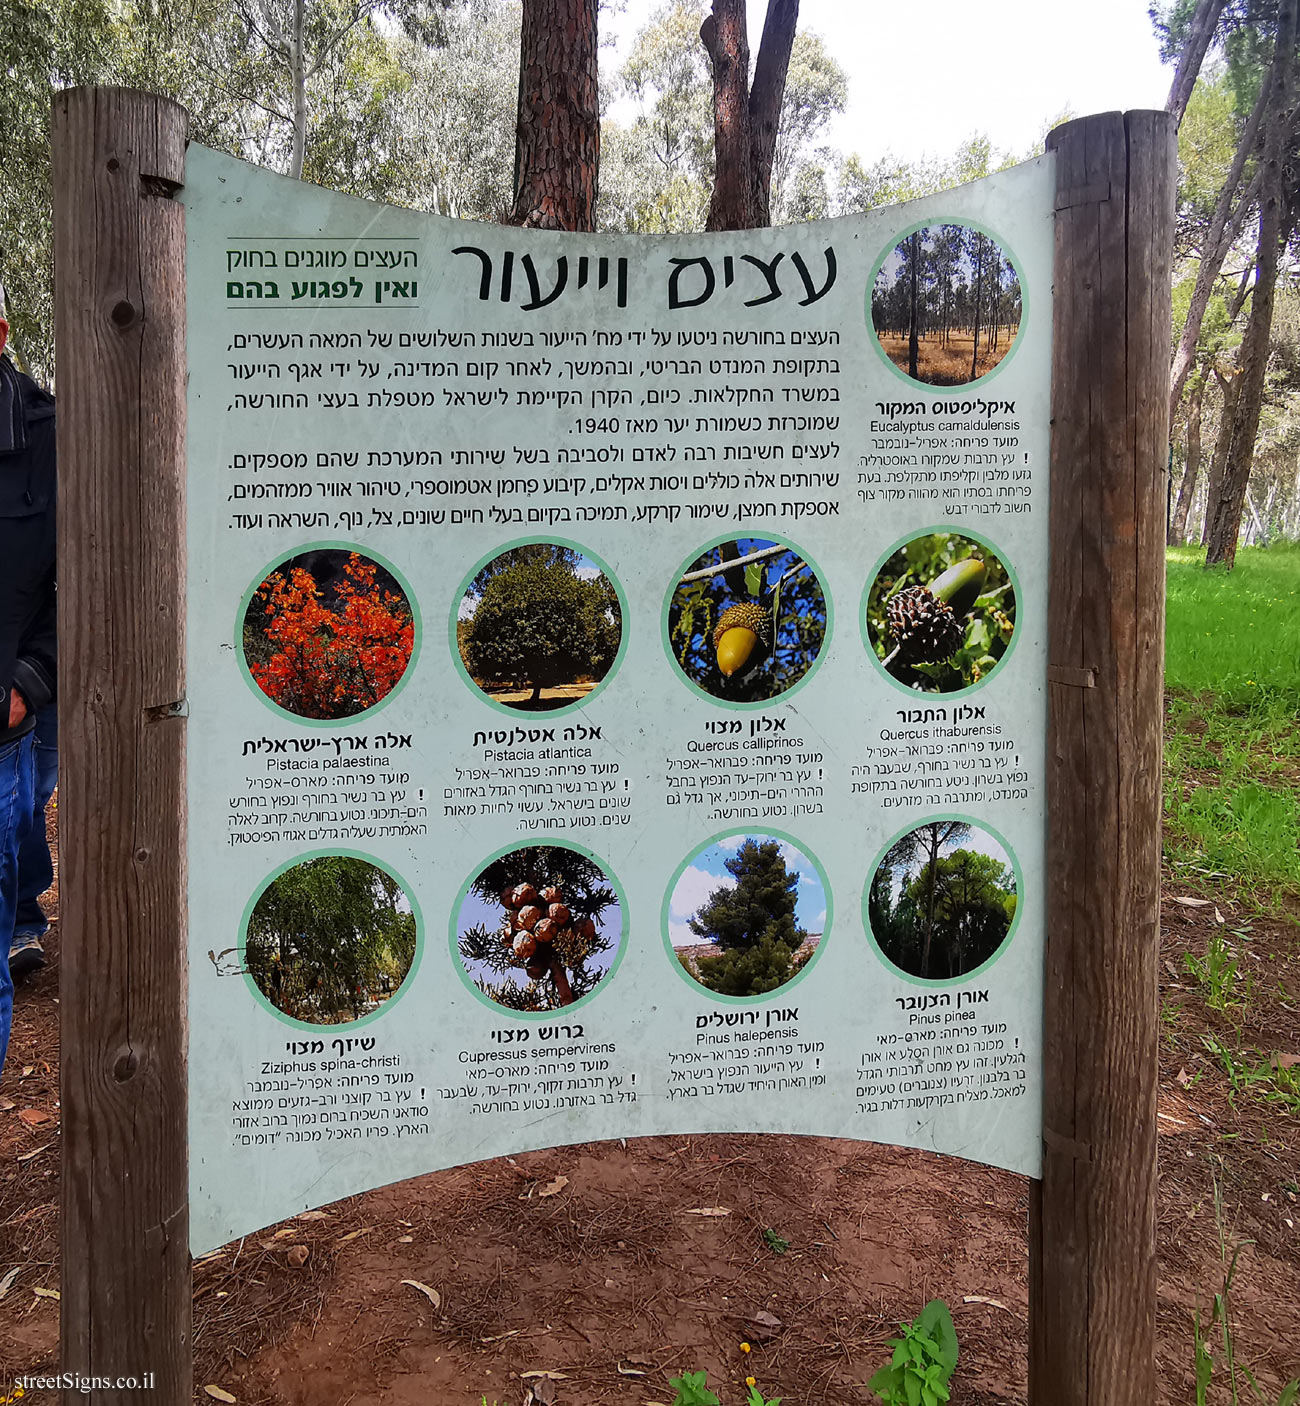 Netanya - Sergeant’s Grove - Trees and afforestation